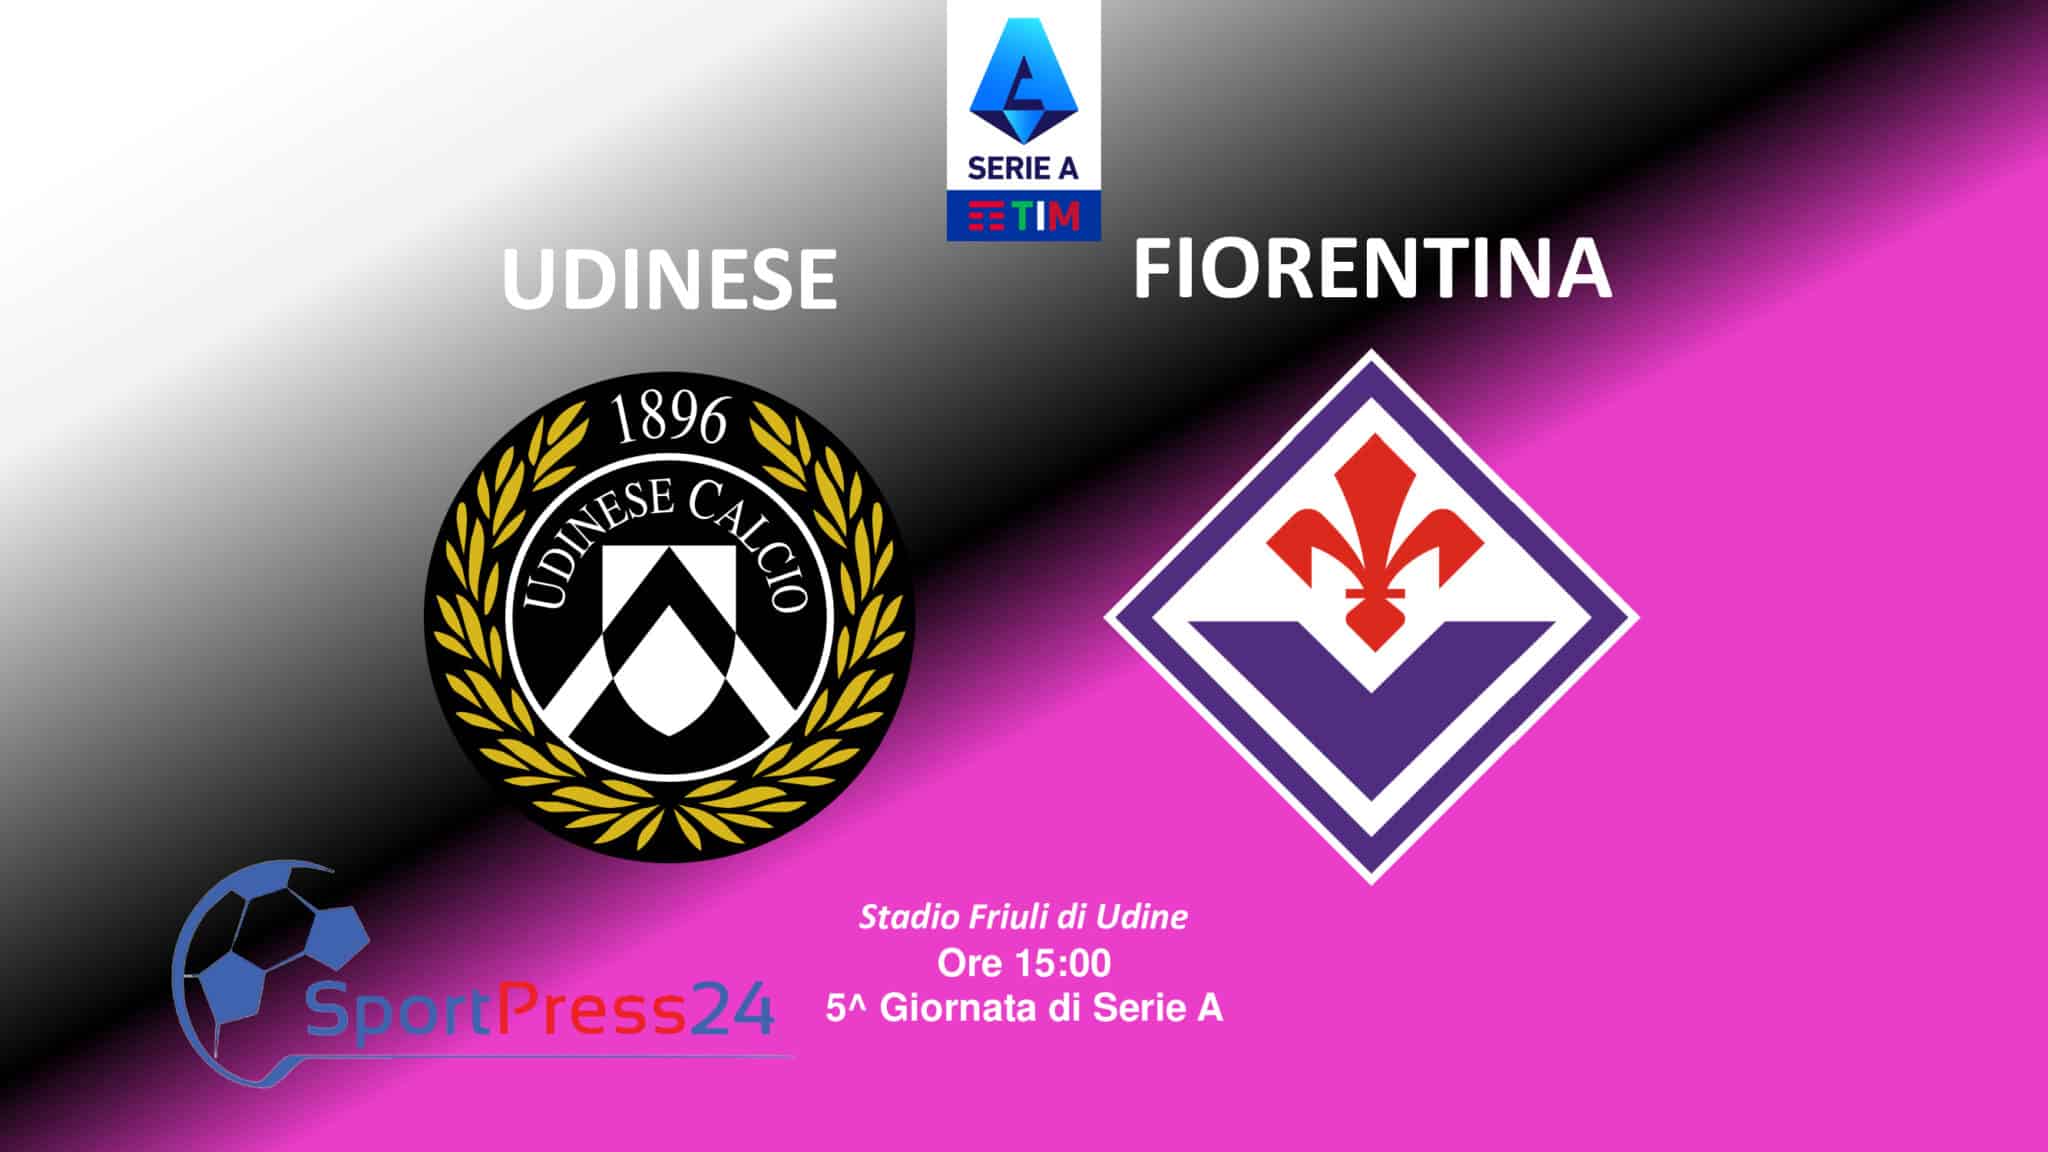 Udinese-Fiorentina (Immagine a cura di Valerio Giuseppe Bellinghieri)